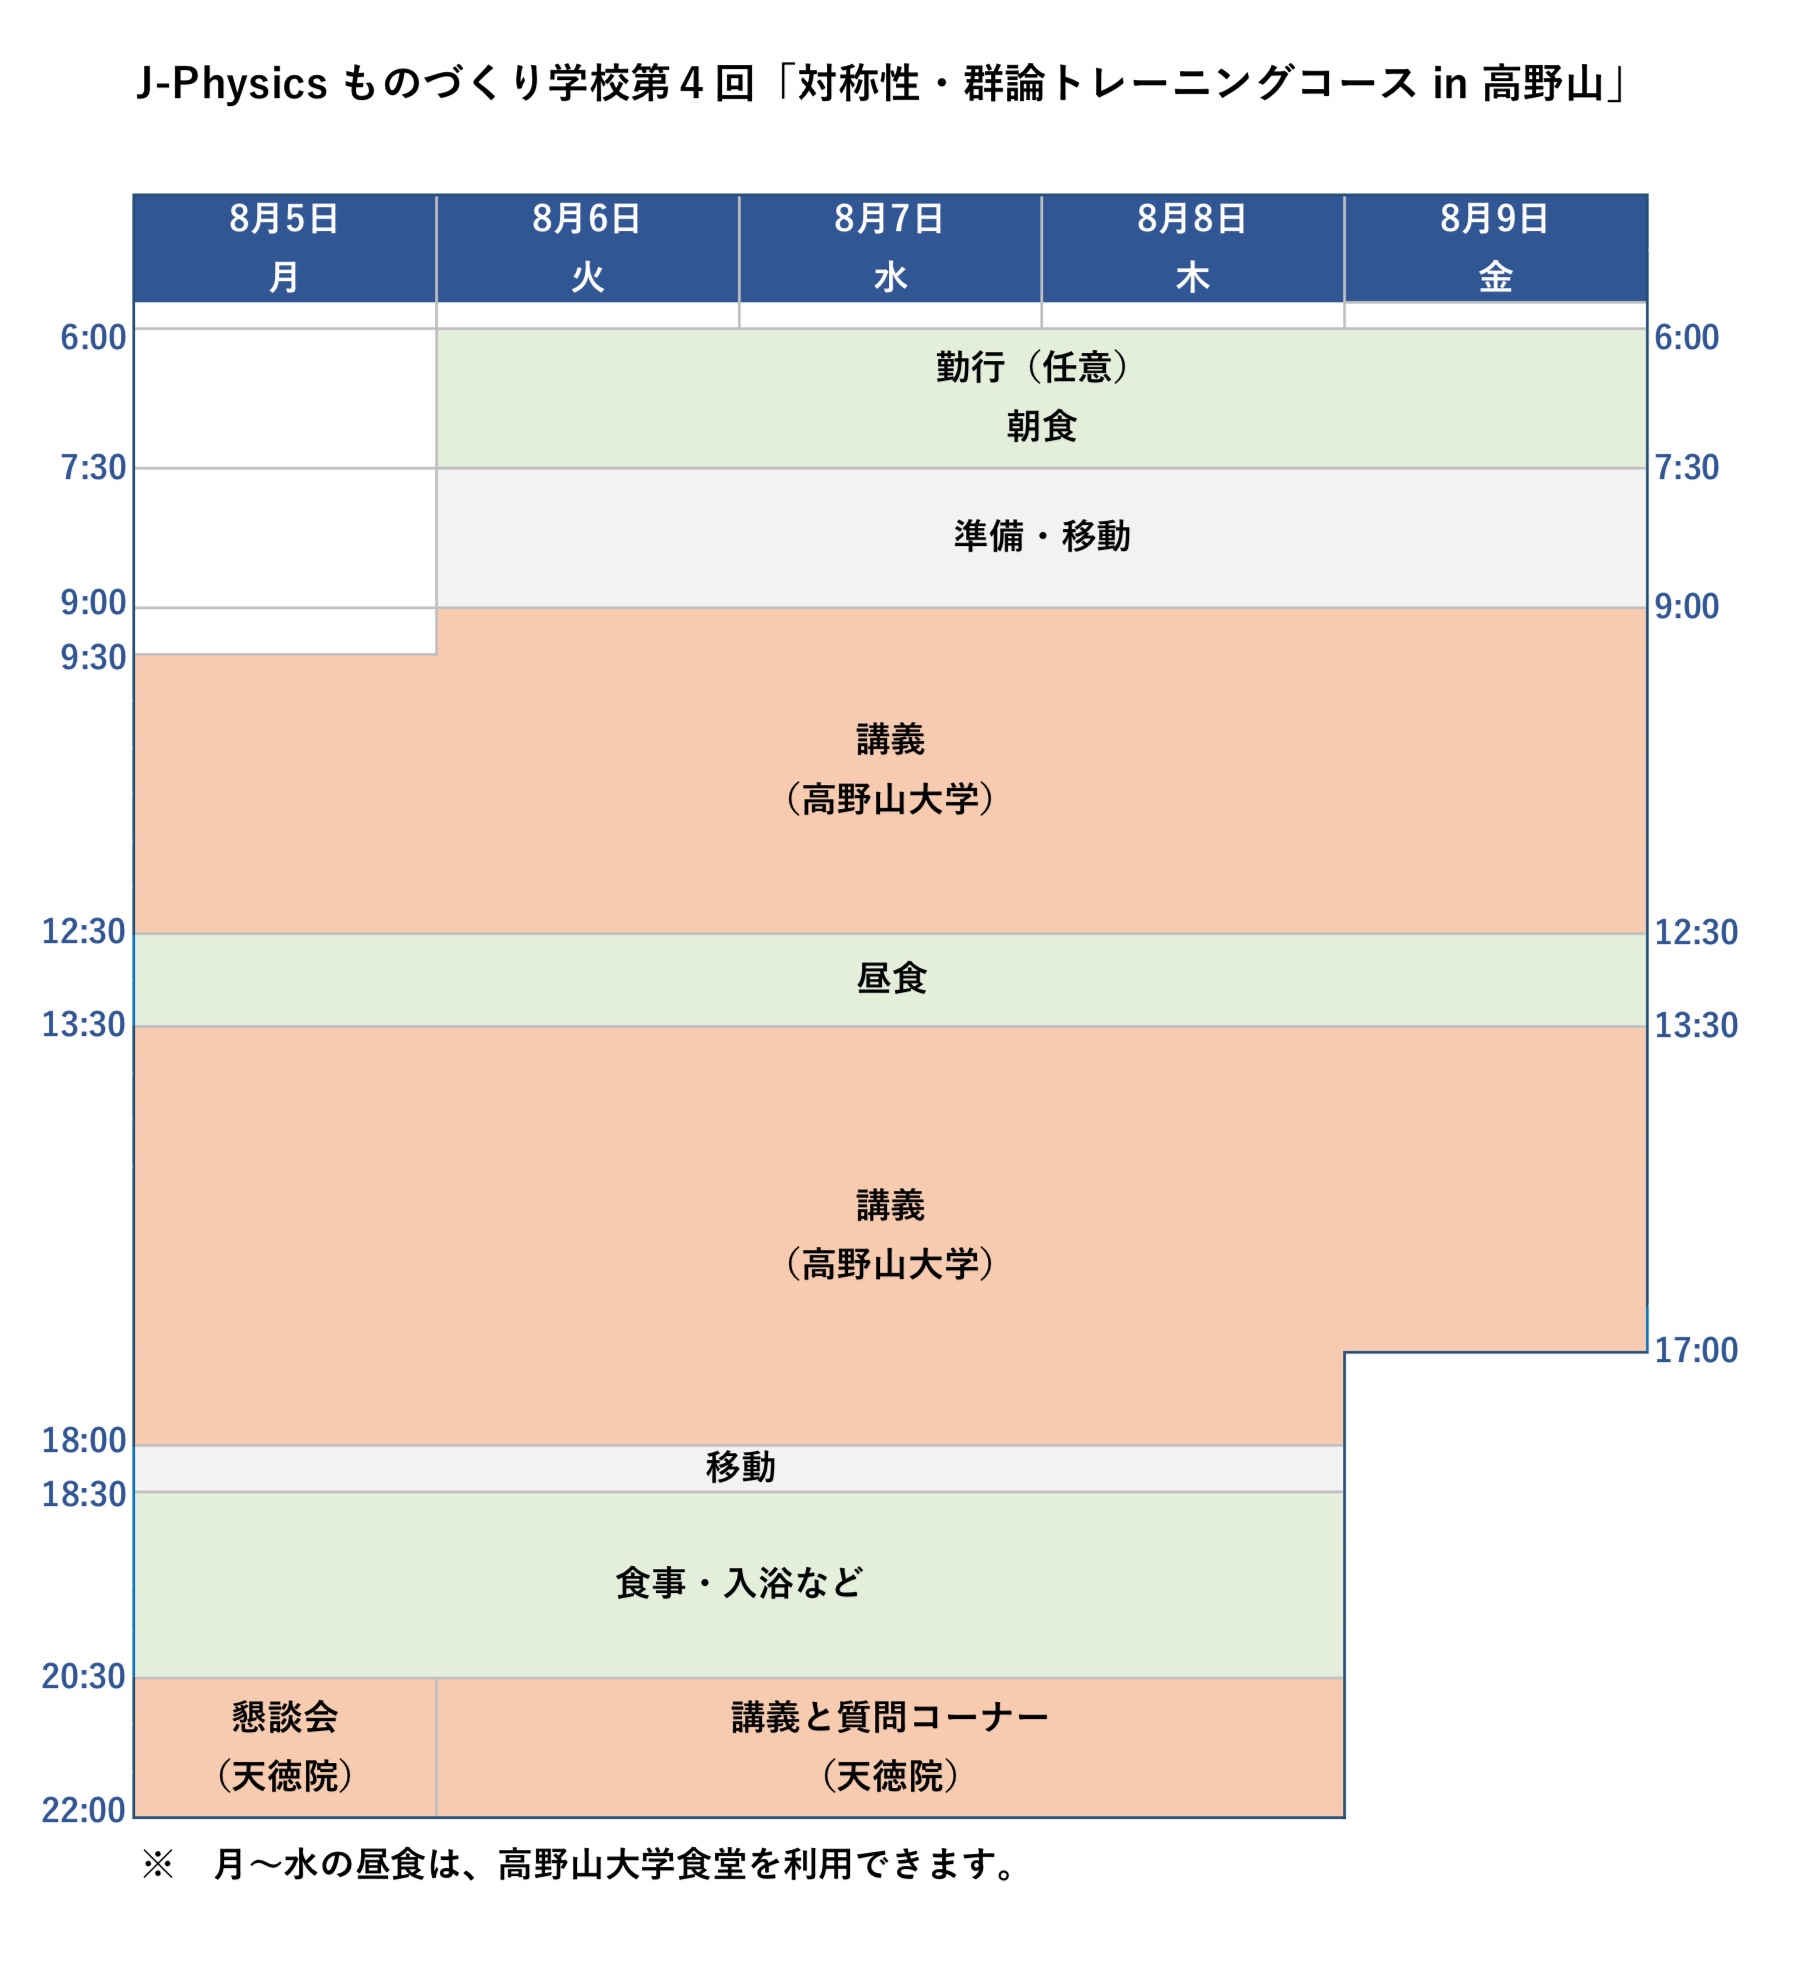 koyasan_2019_schedule.jpg